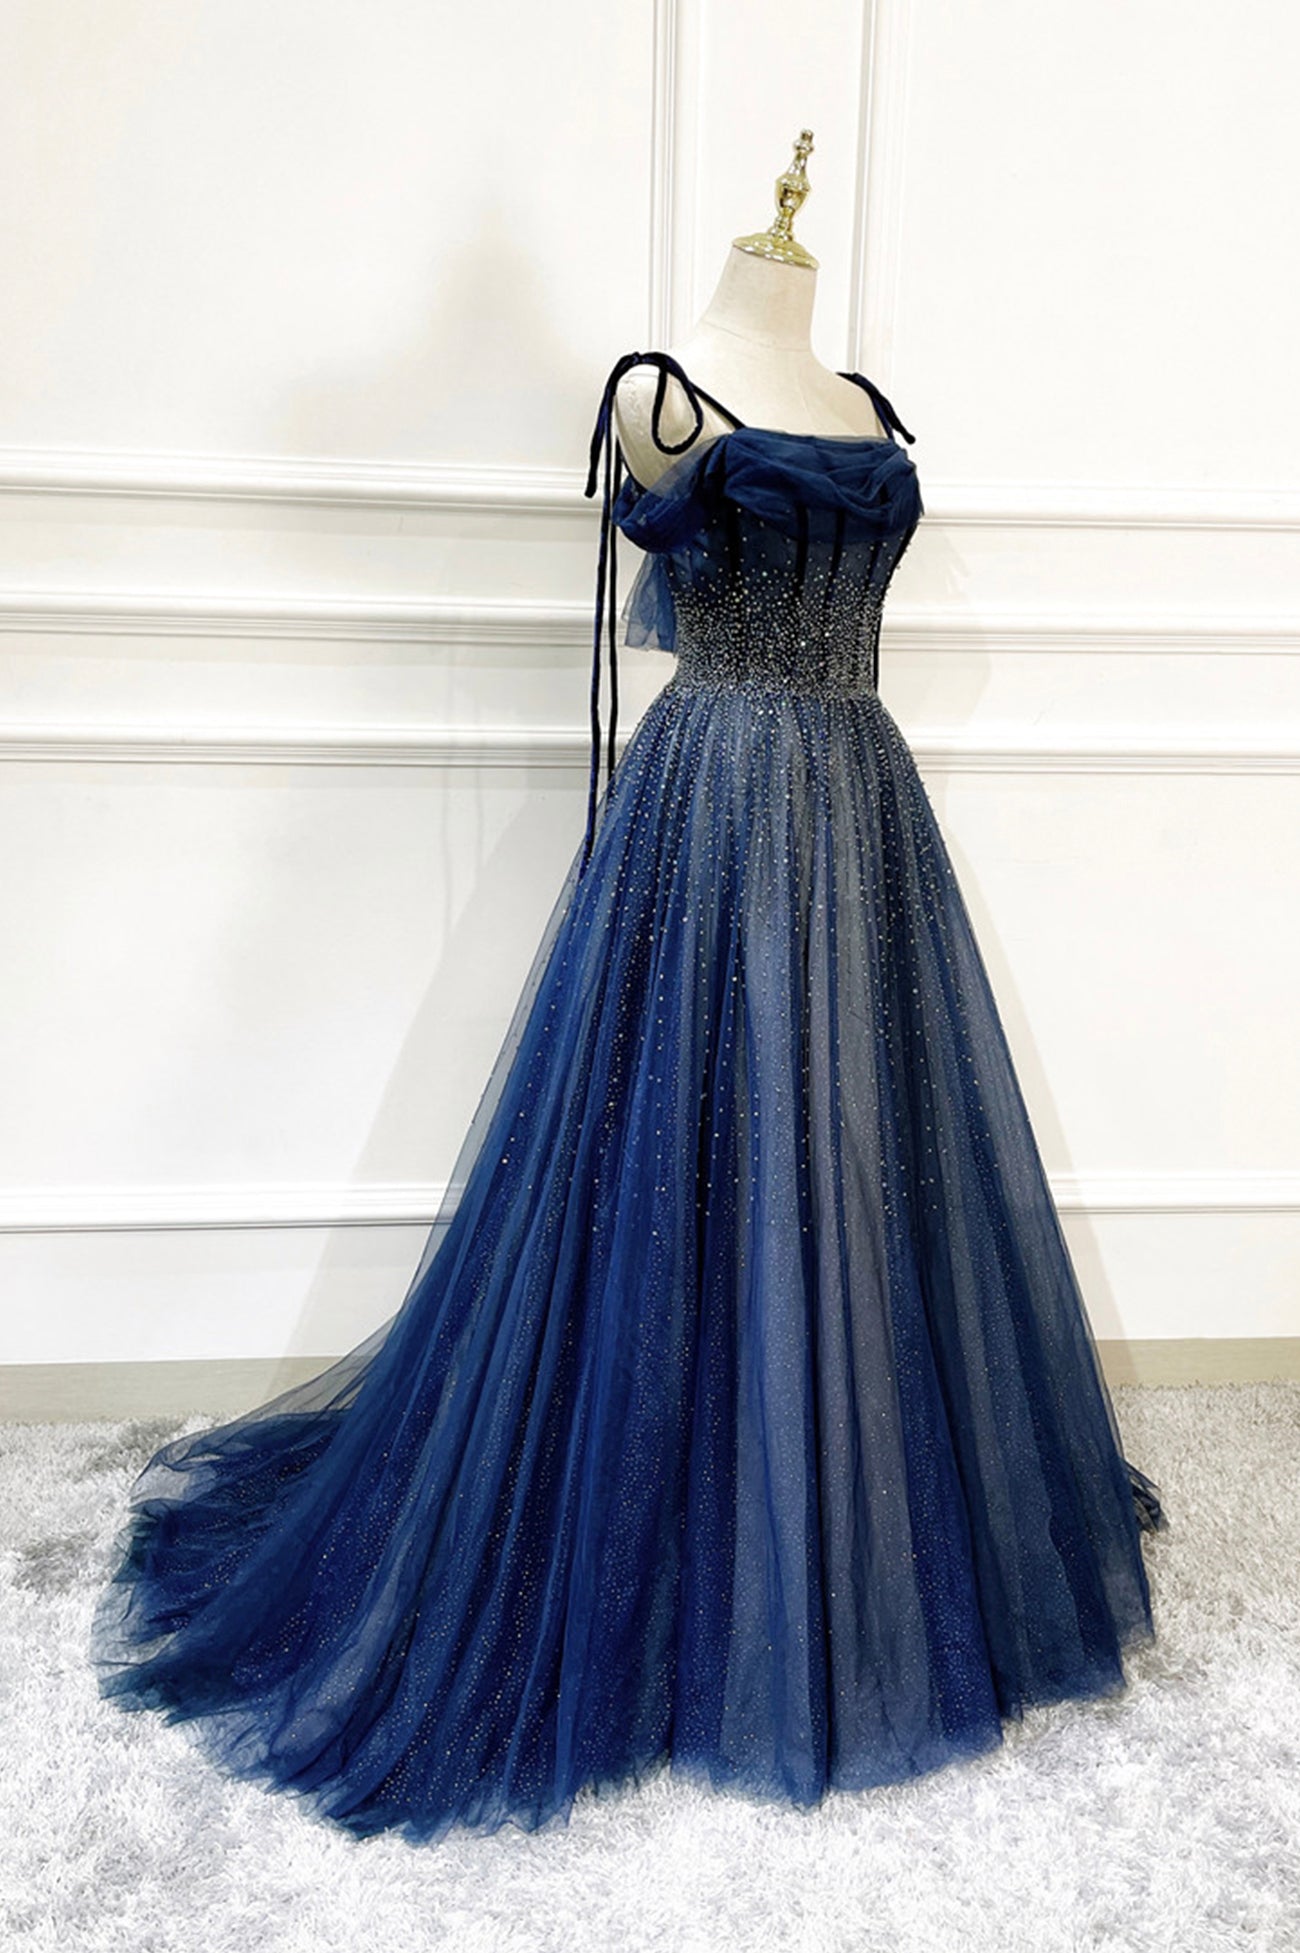 Beauty Dress Design, Blue Long Tulle Beaded Prom Dress, Blue Evening Party Dress